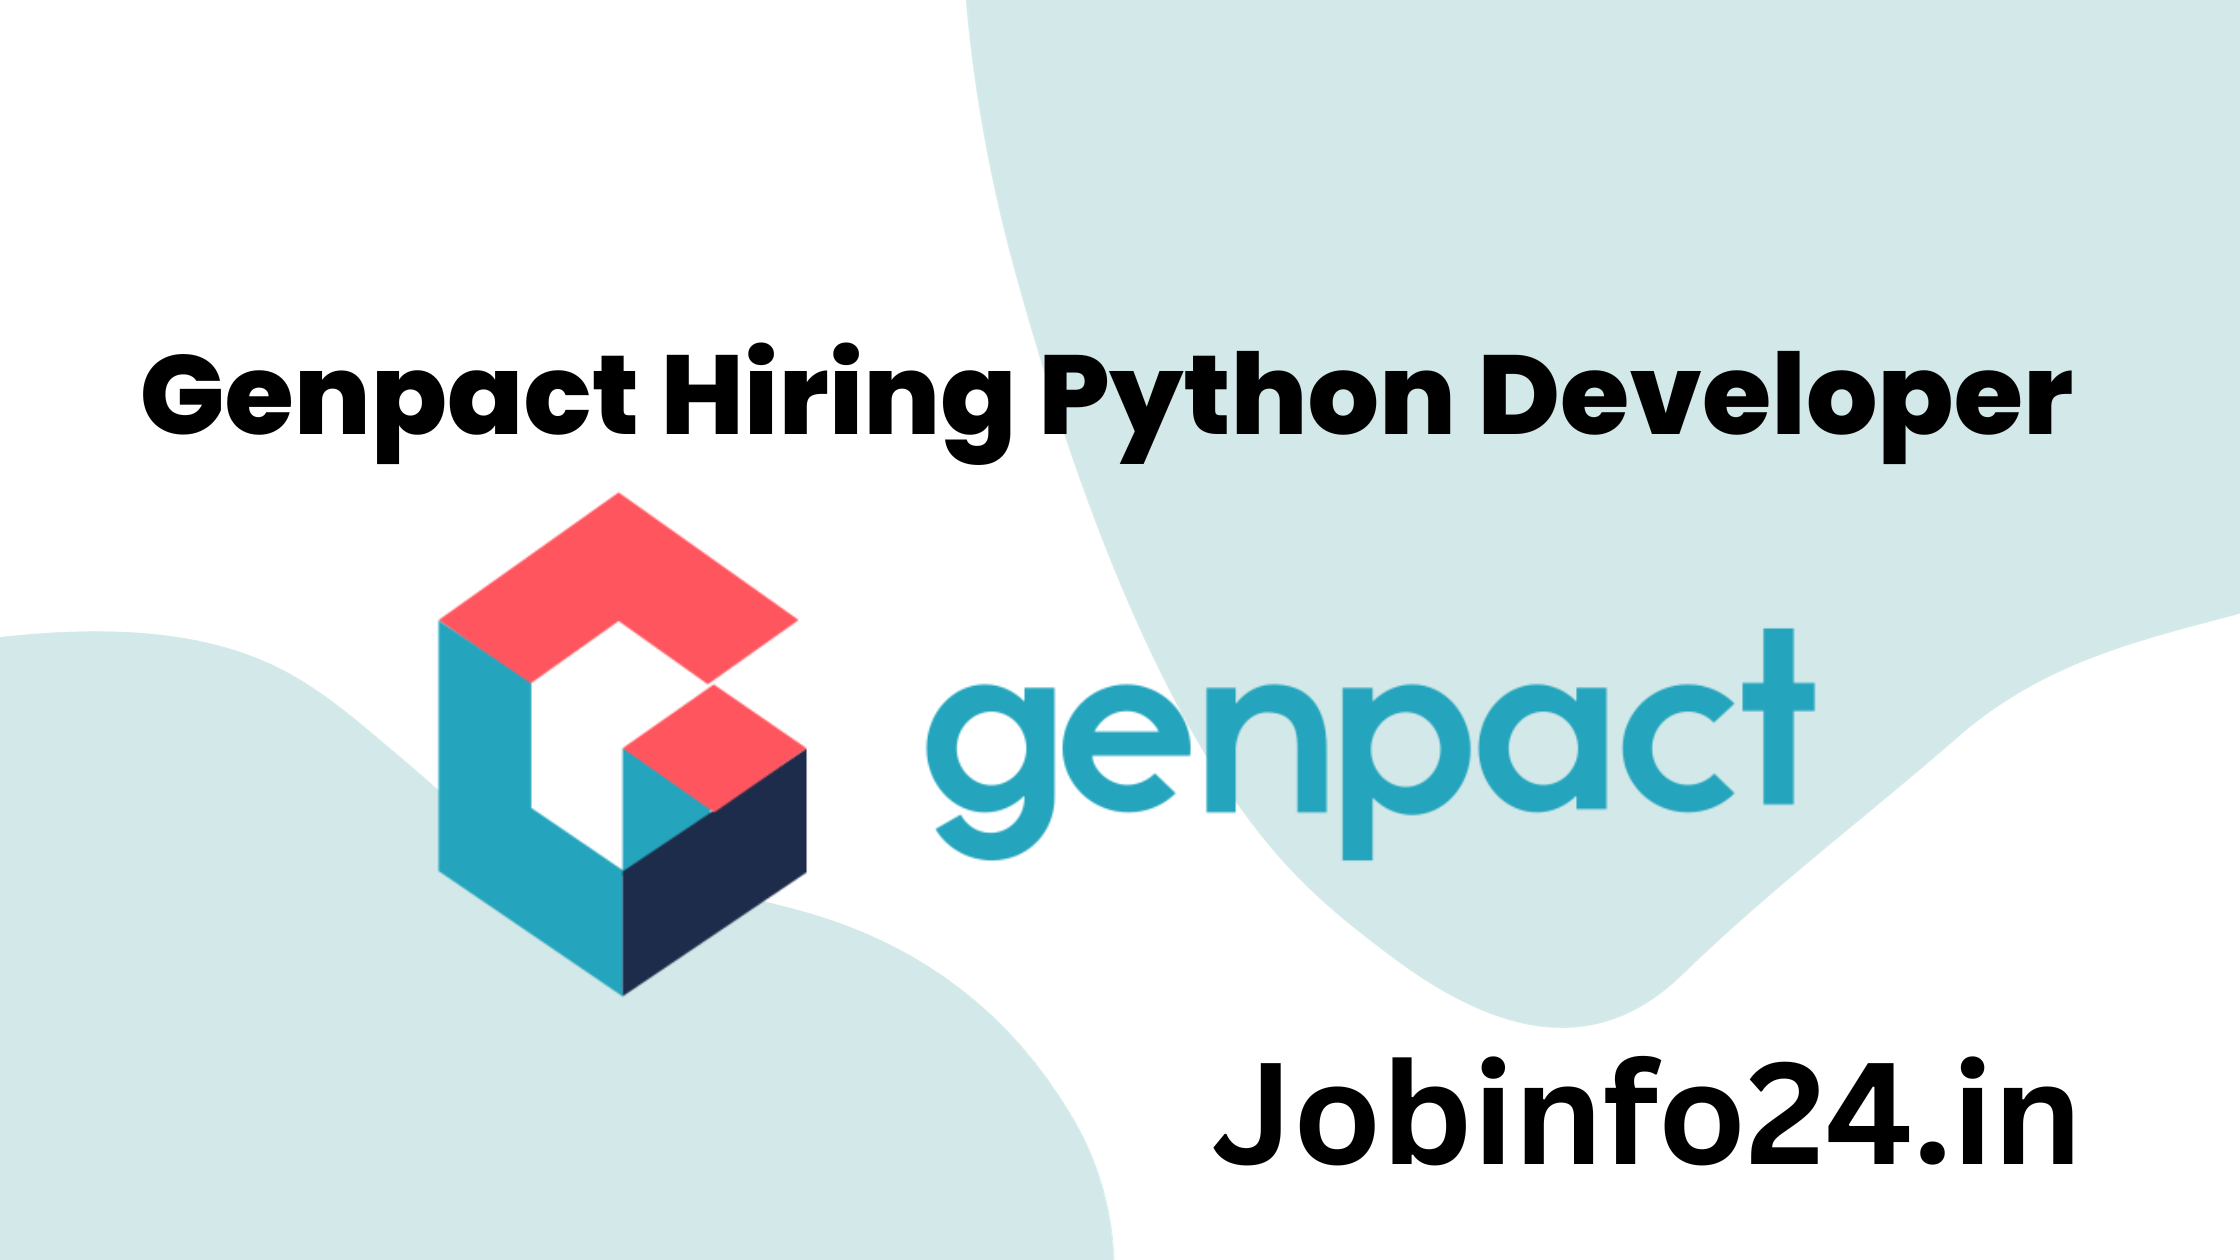 Genpact Hiring Python Developer - Jobinfo24